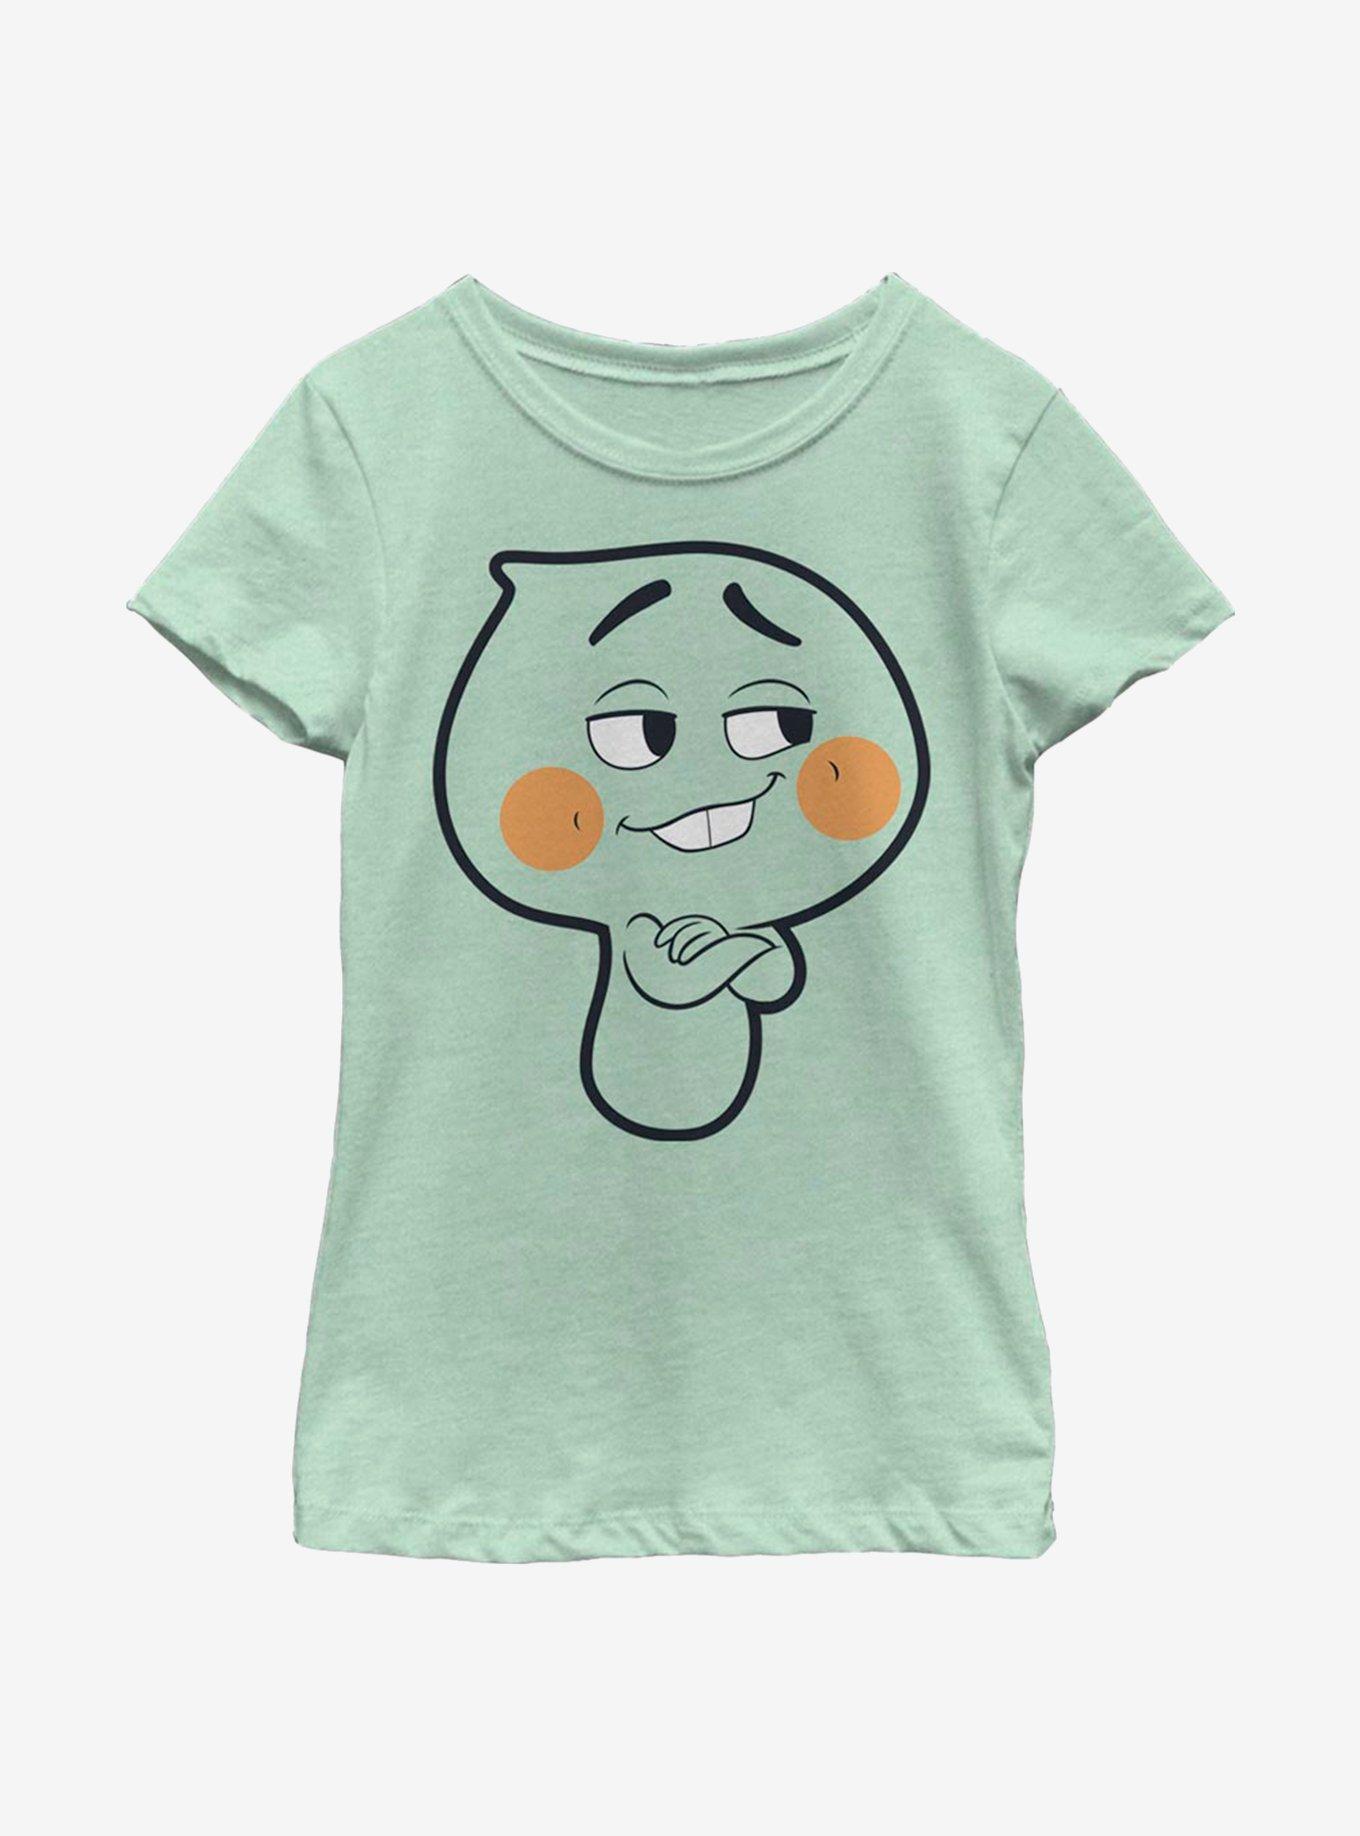 Disney Pixar Soul 22 Big Face Youth Girls T-Shirt, MINT, hi-res